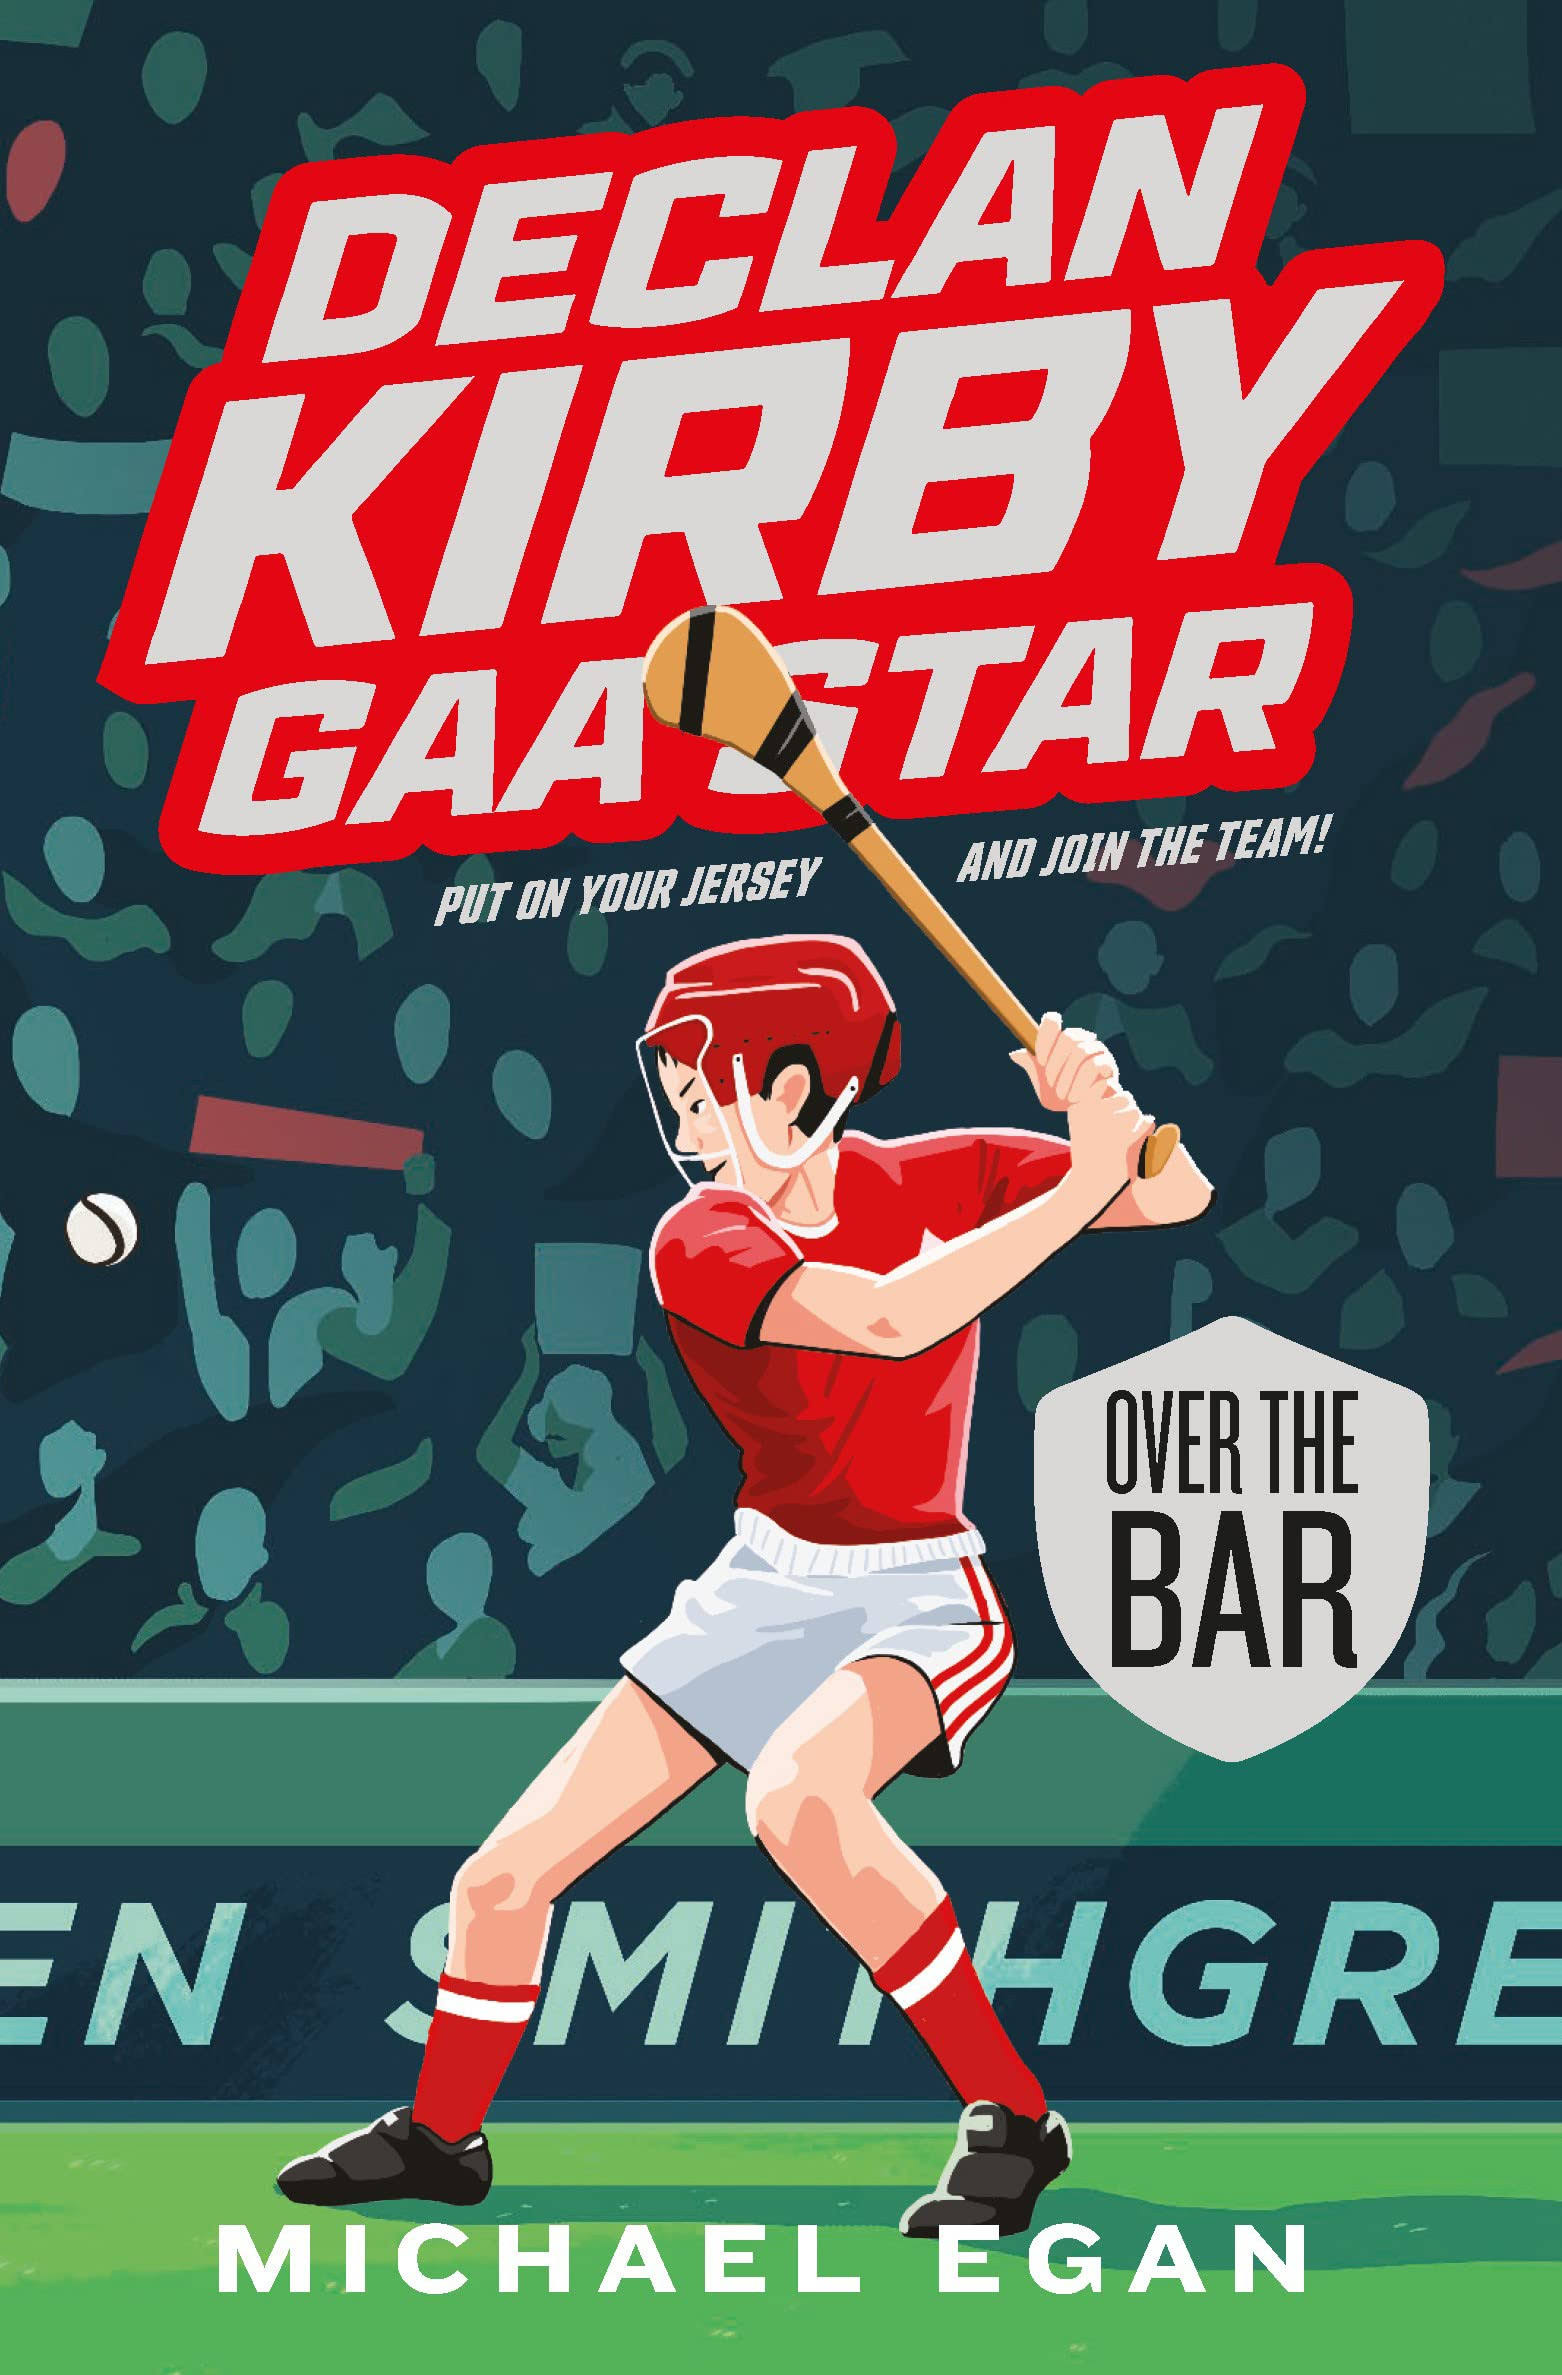 Declan Kirby GAA Star: Over the Bar [Book]